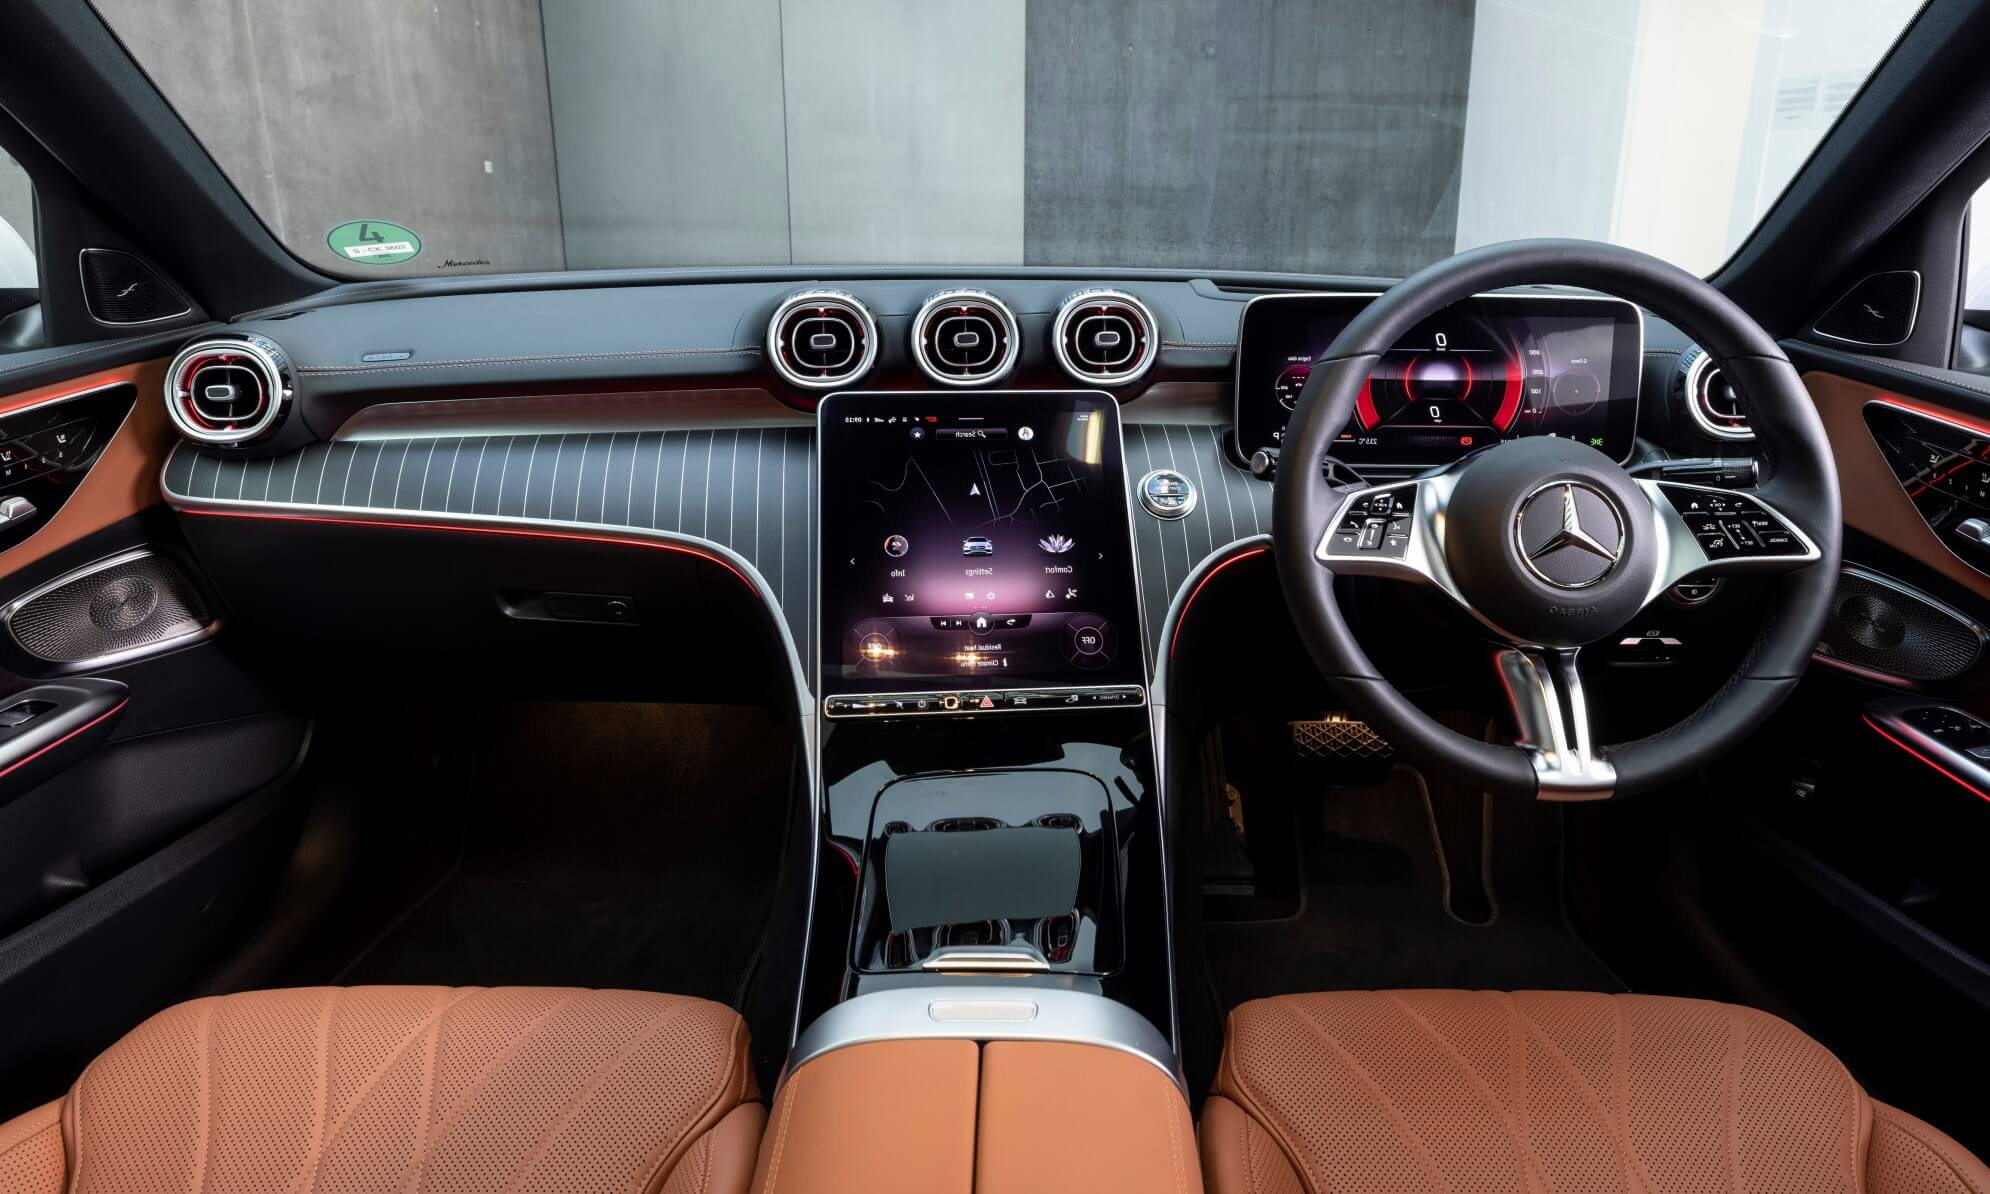 Mercedes-Benz C200 interior